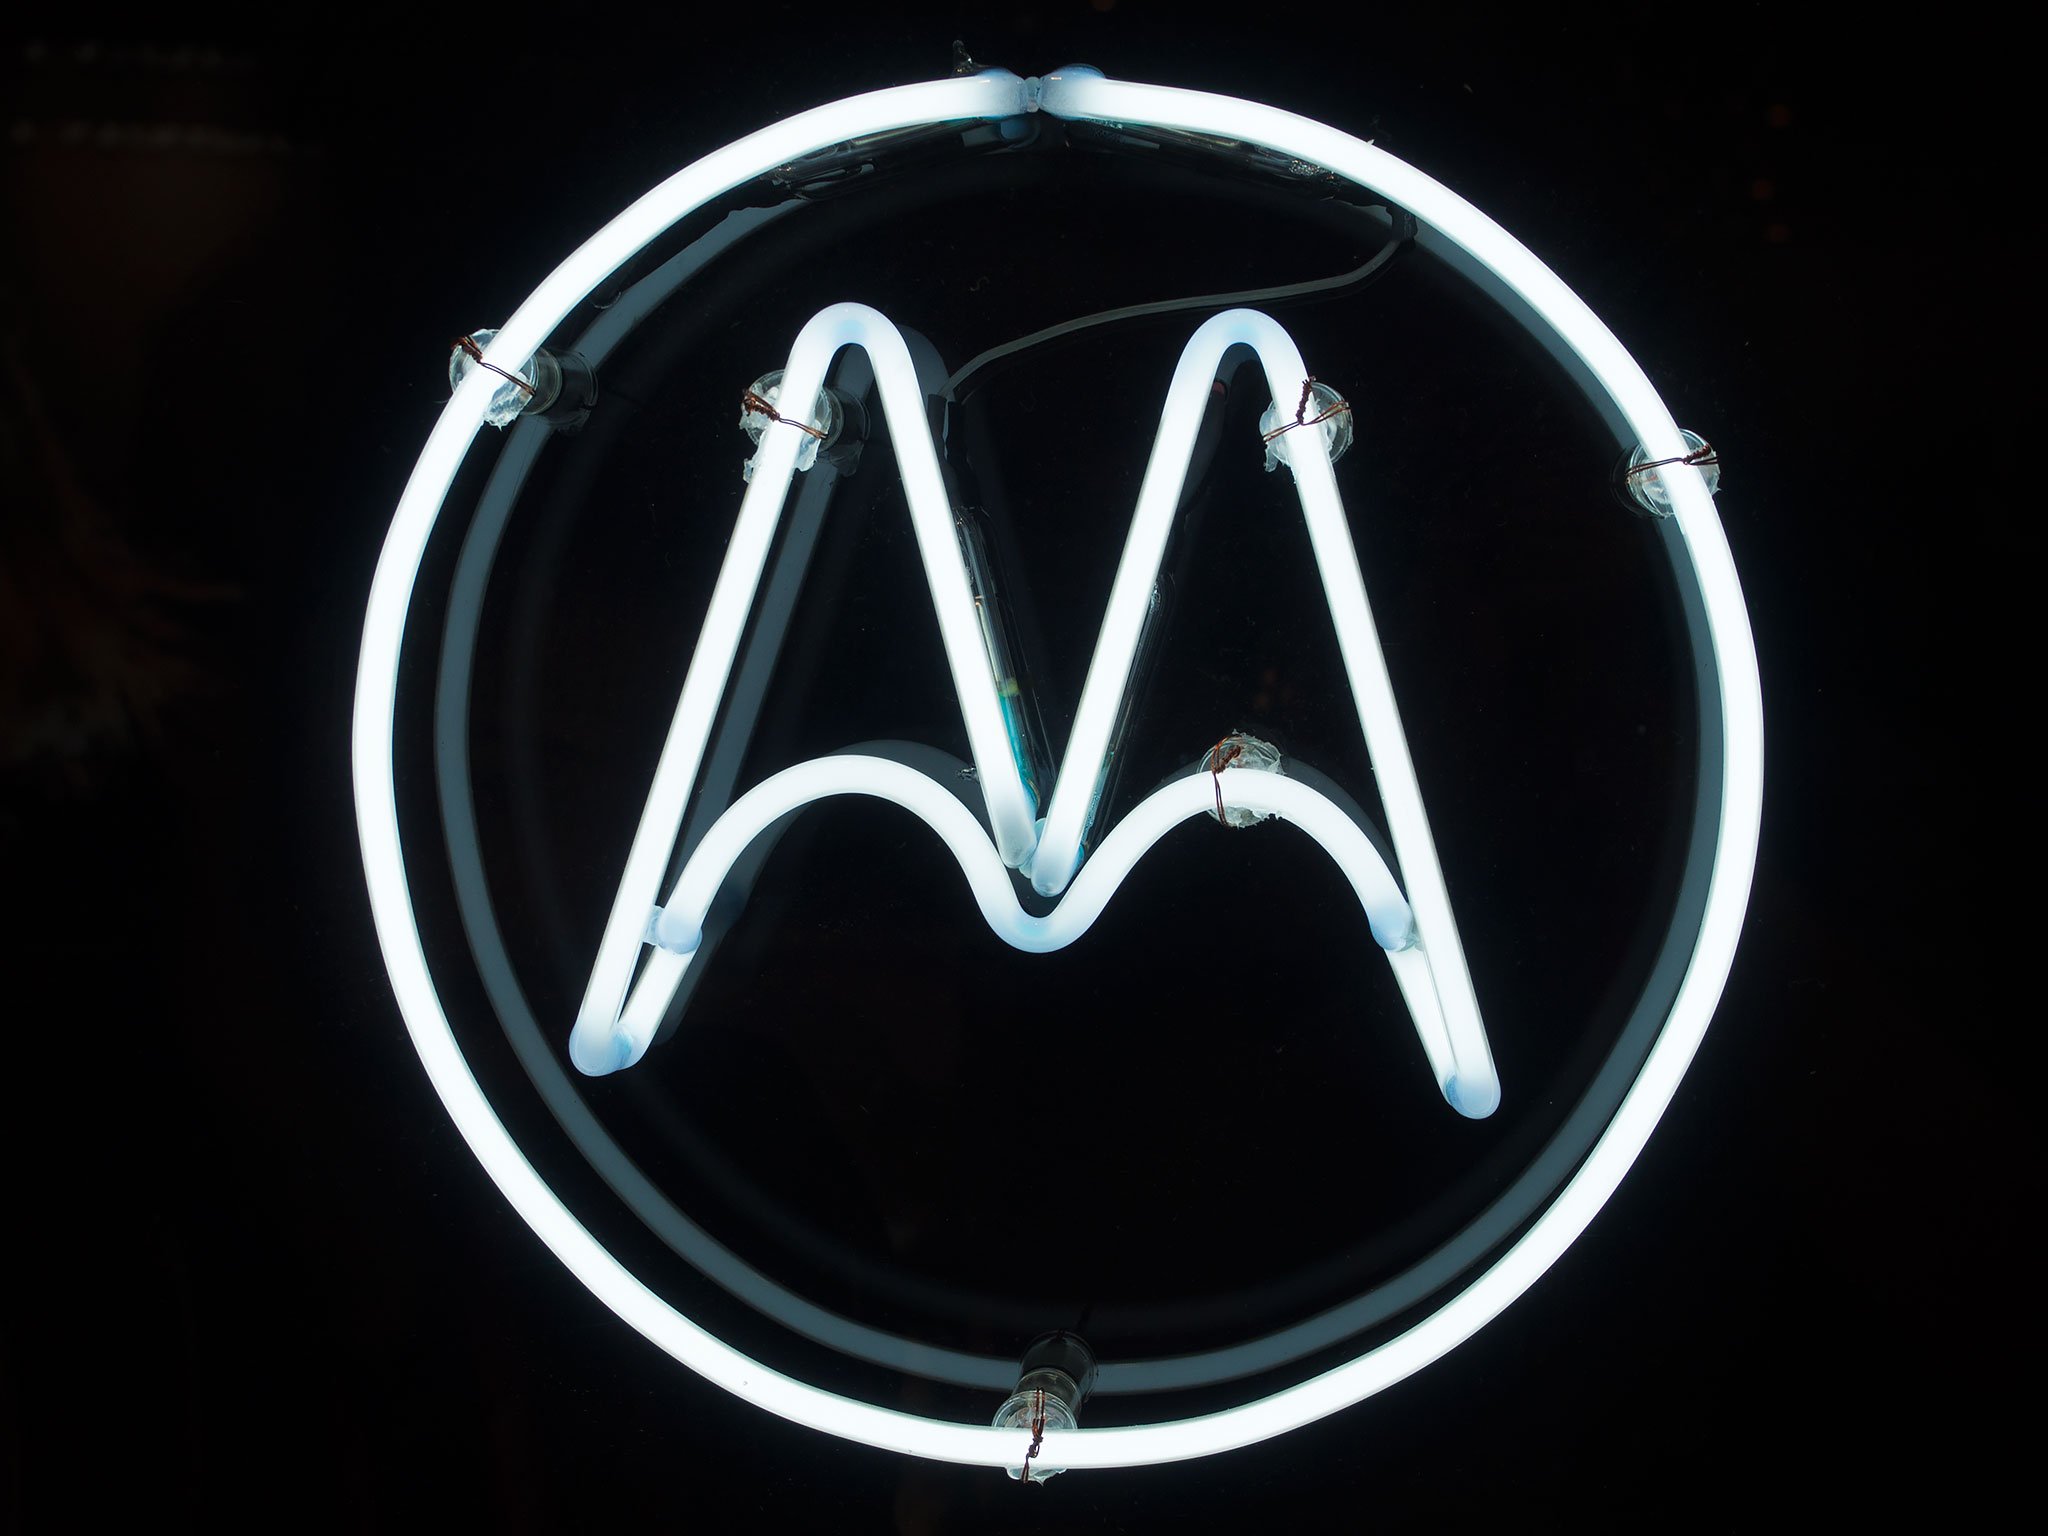 Motorola logo